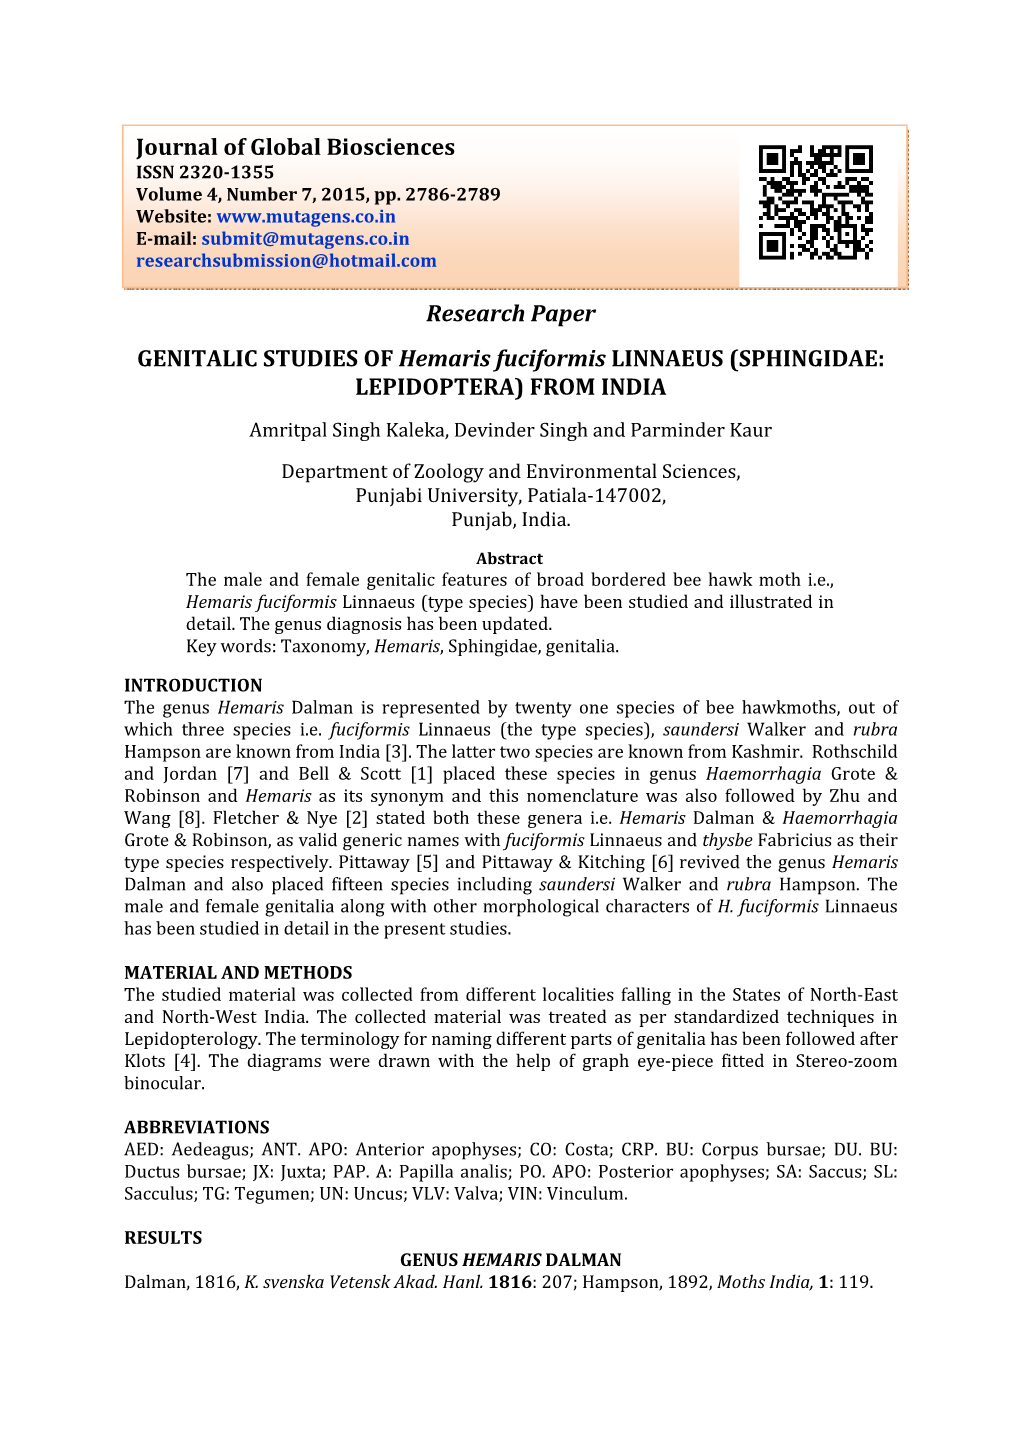 Research Paper GENITALIC STUDIES of Hemaris Fuciformis LINNAEUS (SPHINGIDAE: LEPIDOPTERA) from INDIA Journal of Global Bioscie